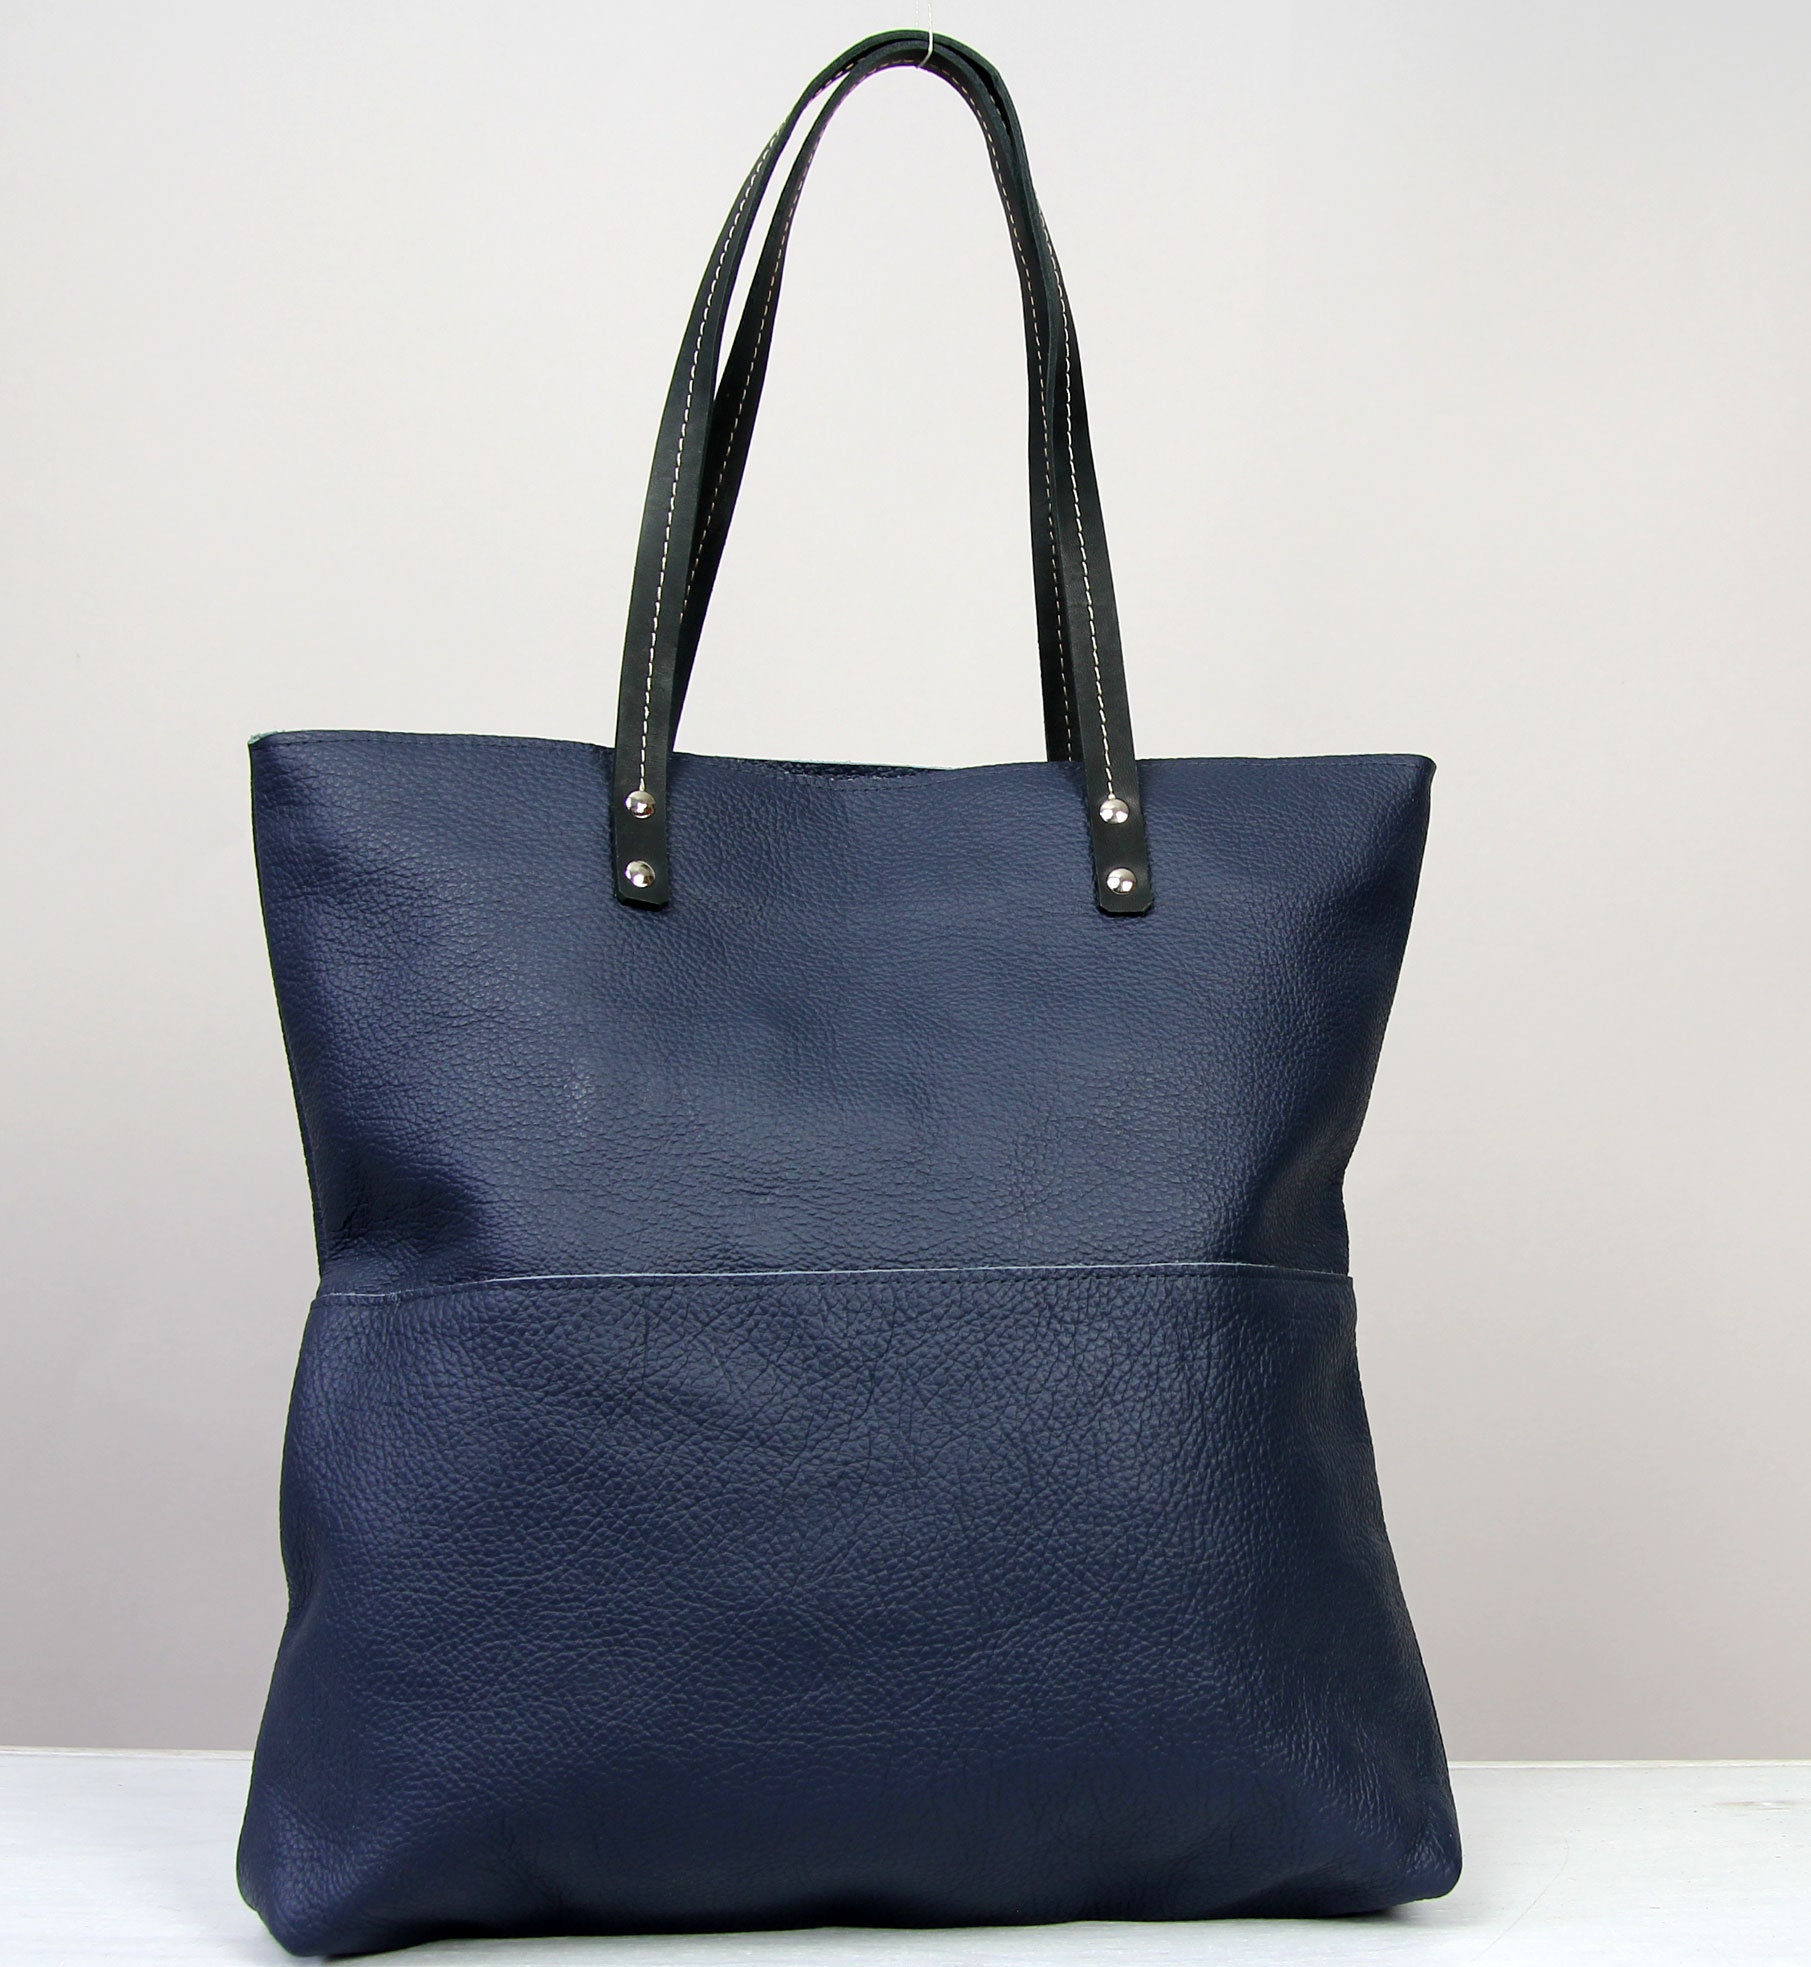 jumbo shopper tote bag with zipper 21.5in